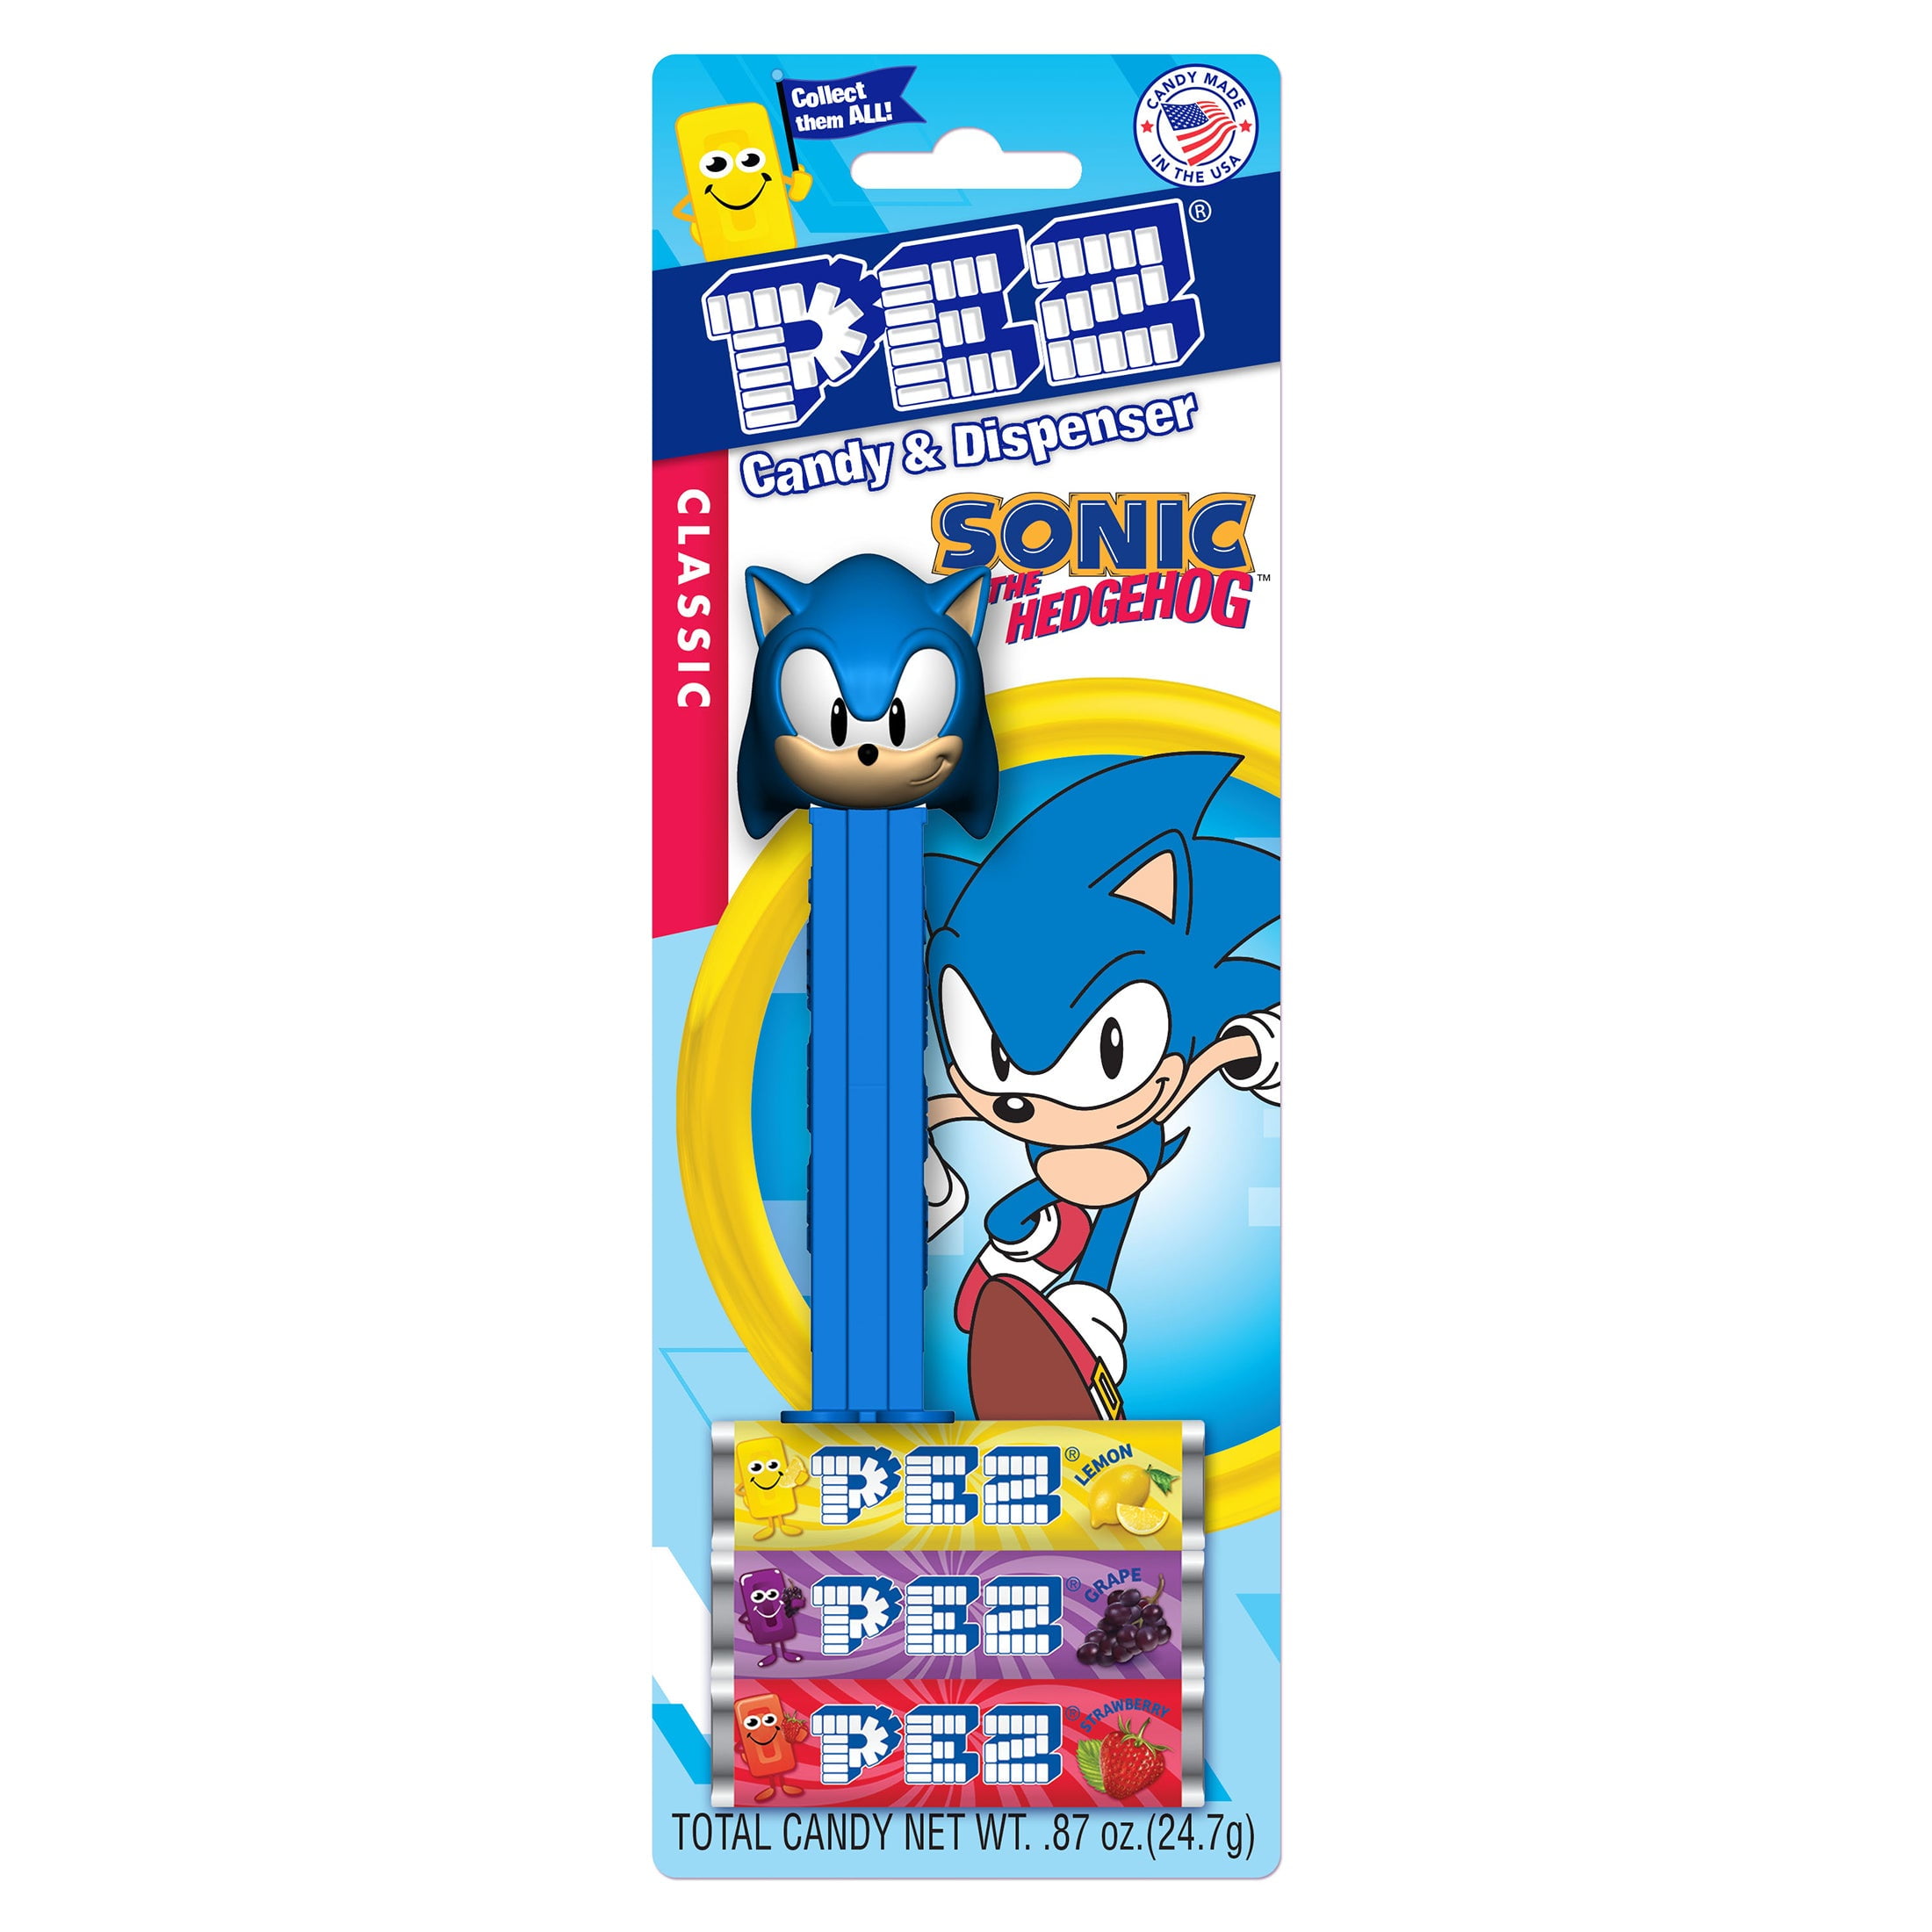 PEZ Sonic Candy Dispenser Plus 3 Candy Refills, 1 Count, 0.87oz